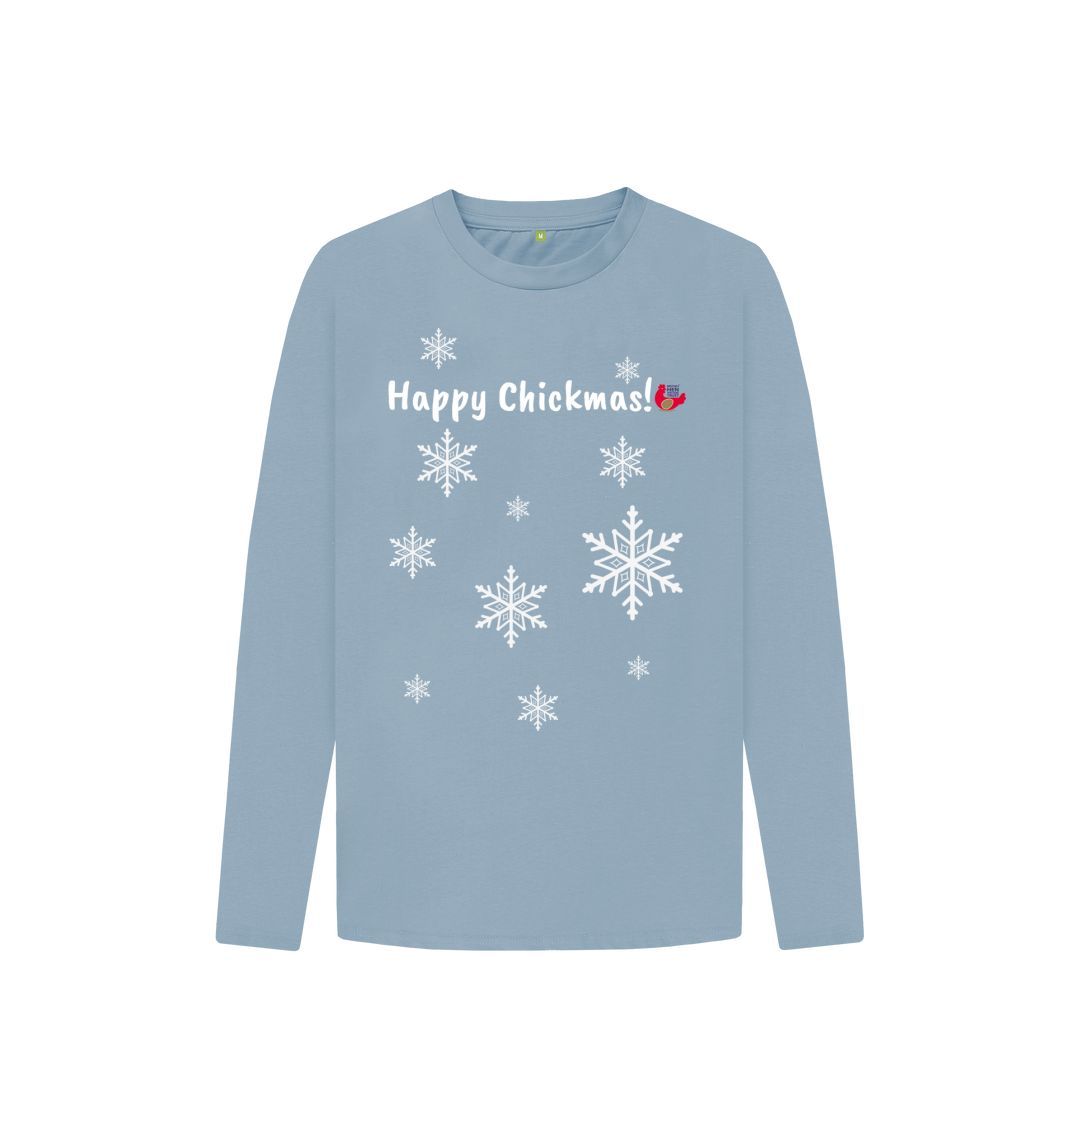 Stone Blue Kids Long Sleeve T-Shirt - Happy Chickmas! Snowflakes